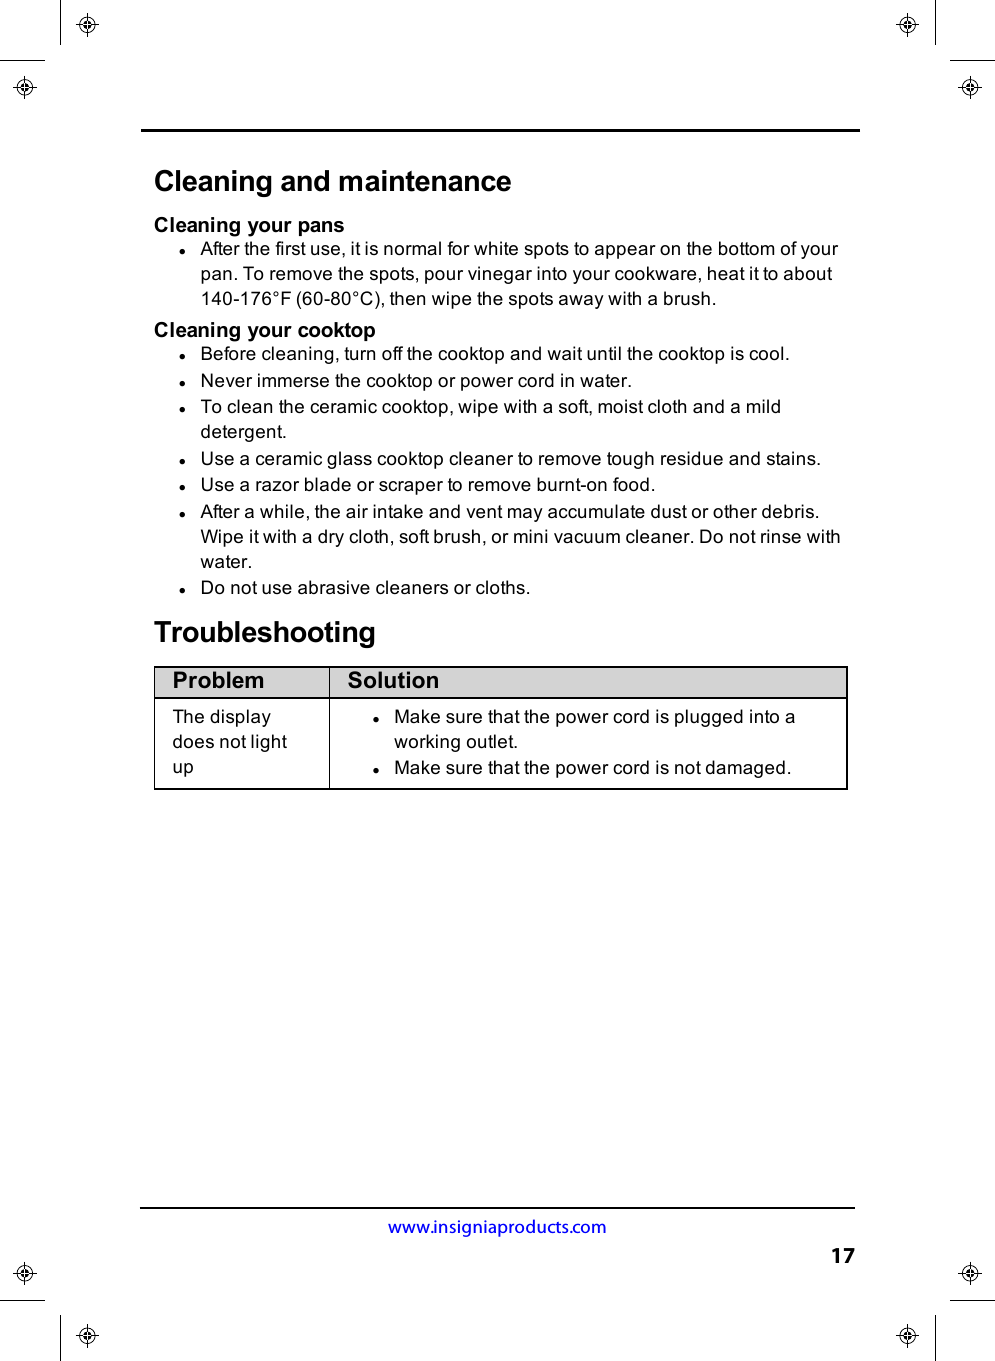 midea rice cooker instruction manual